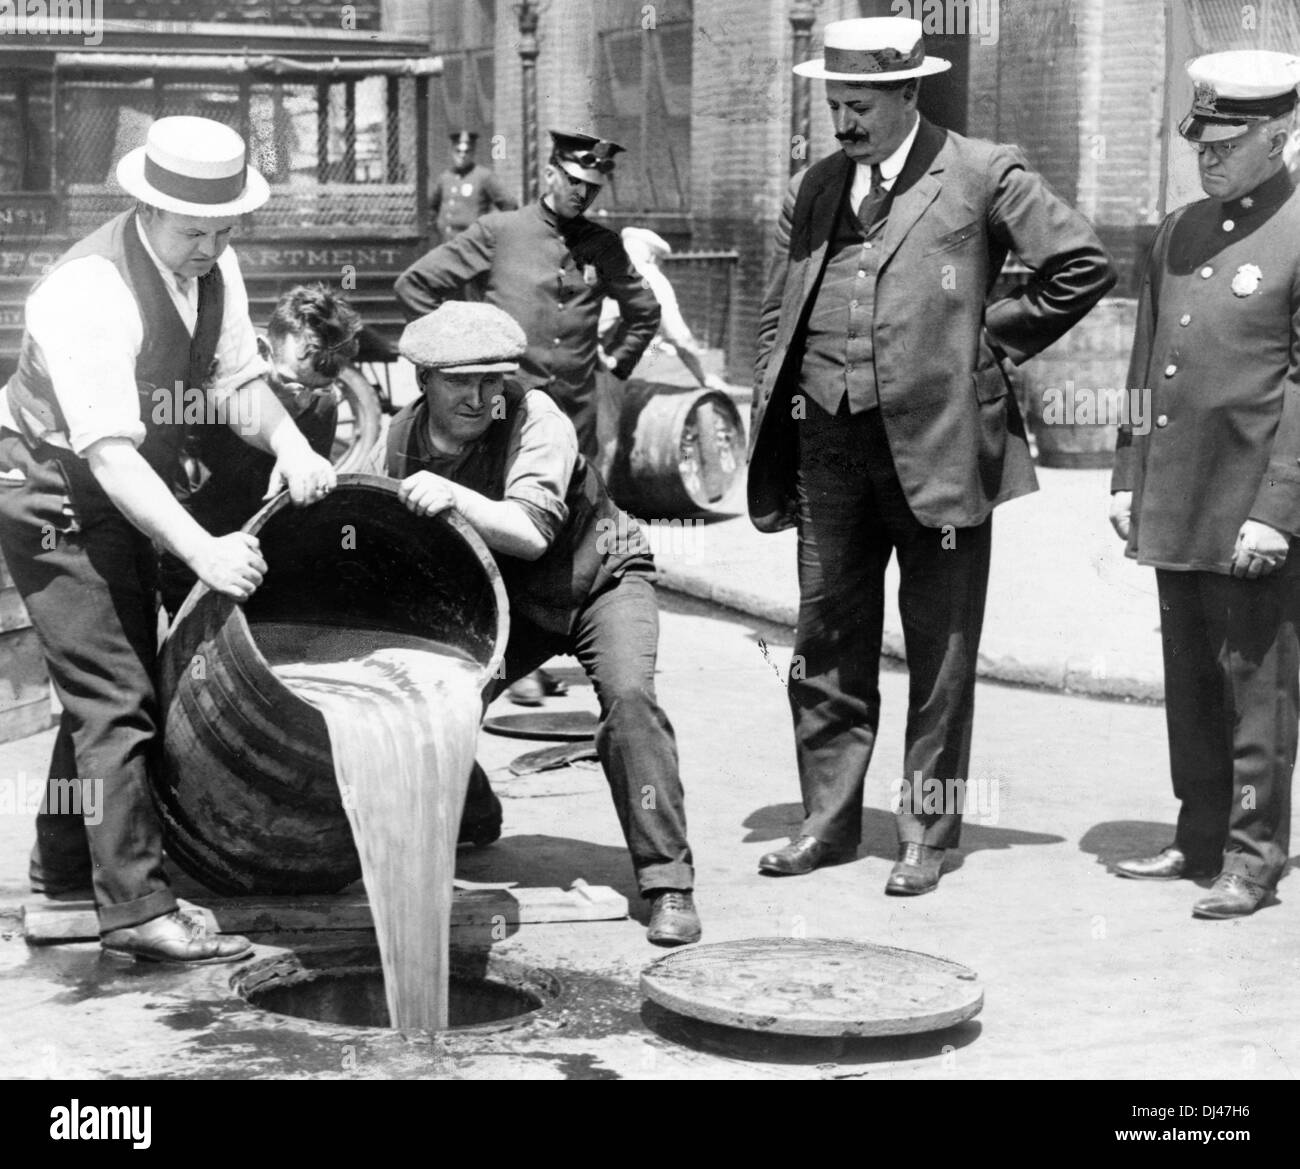 Destruction of alcohol during Prohibition era, America, agents pour liquor into sewer following a raid Stock Photo